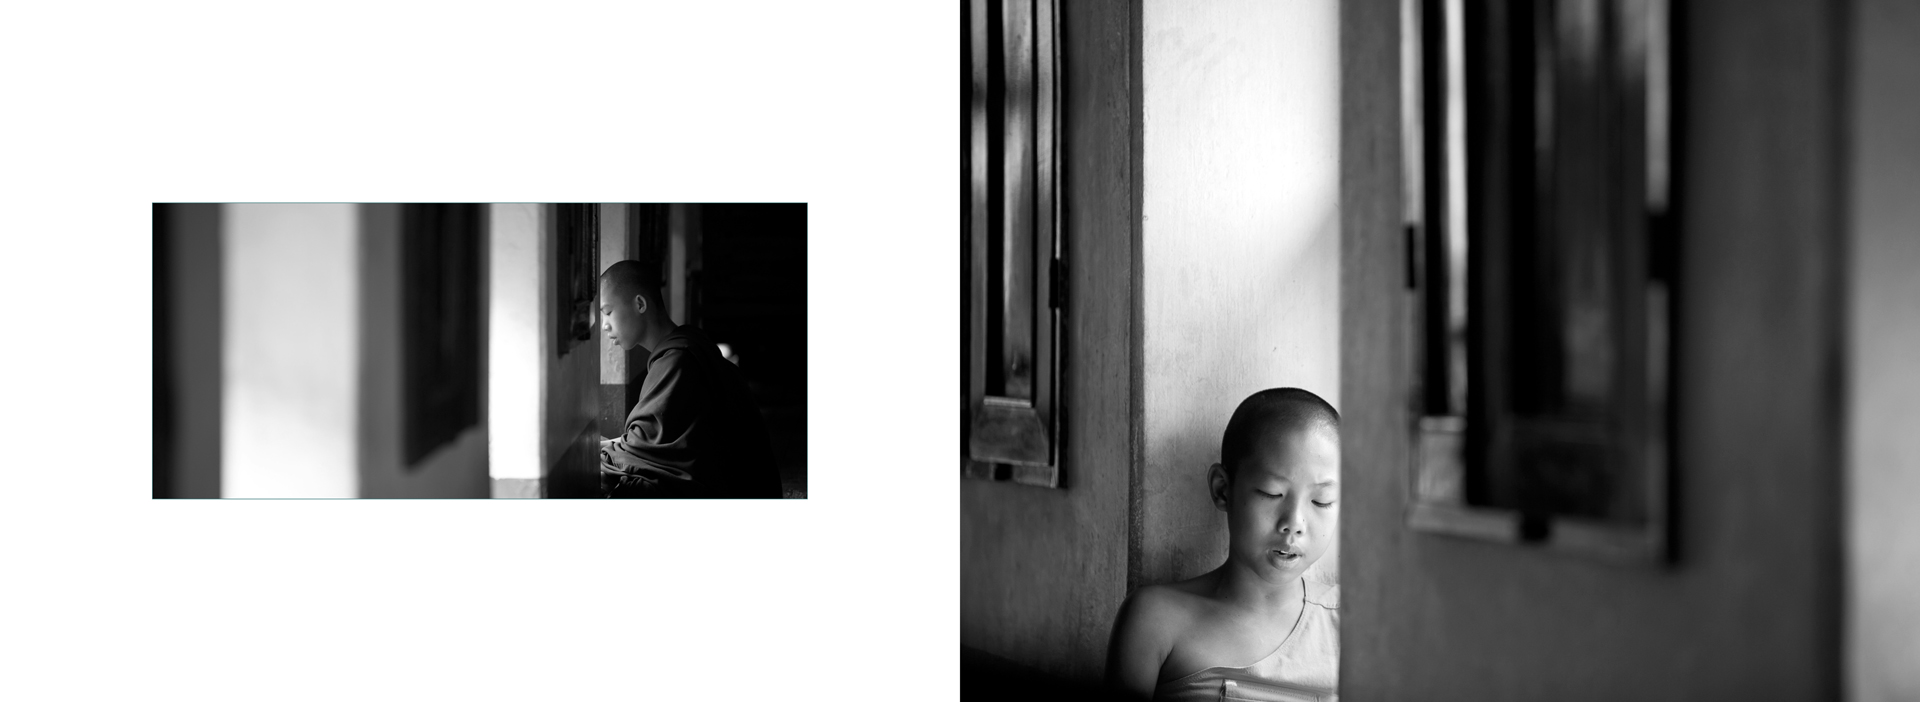 Monks in Myanmar by Roberto Falck